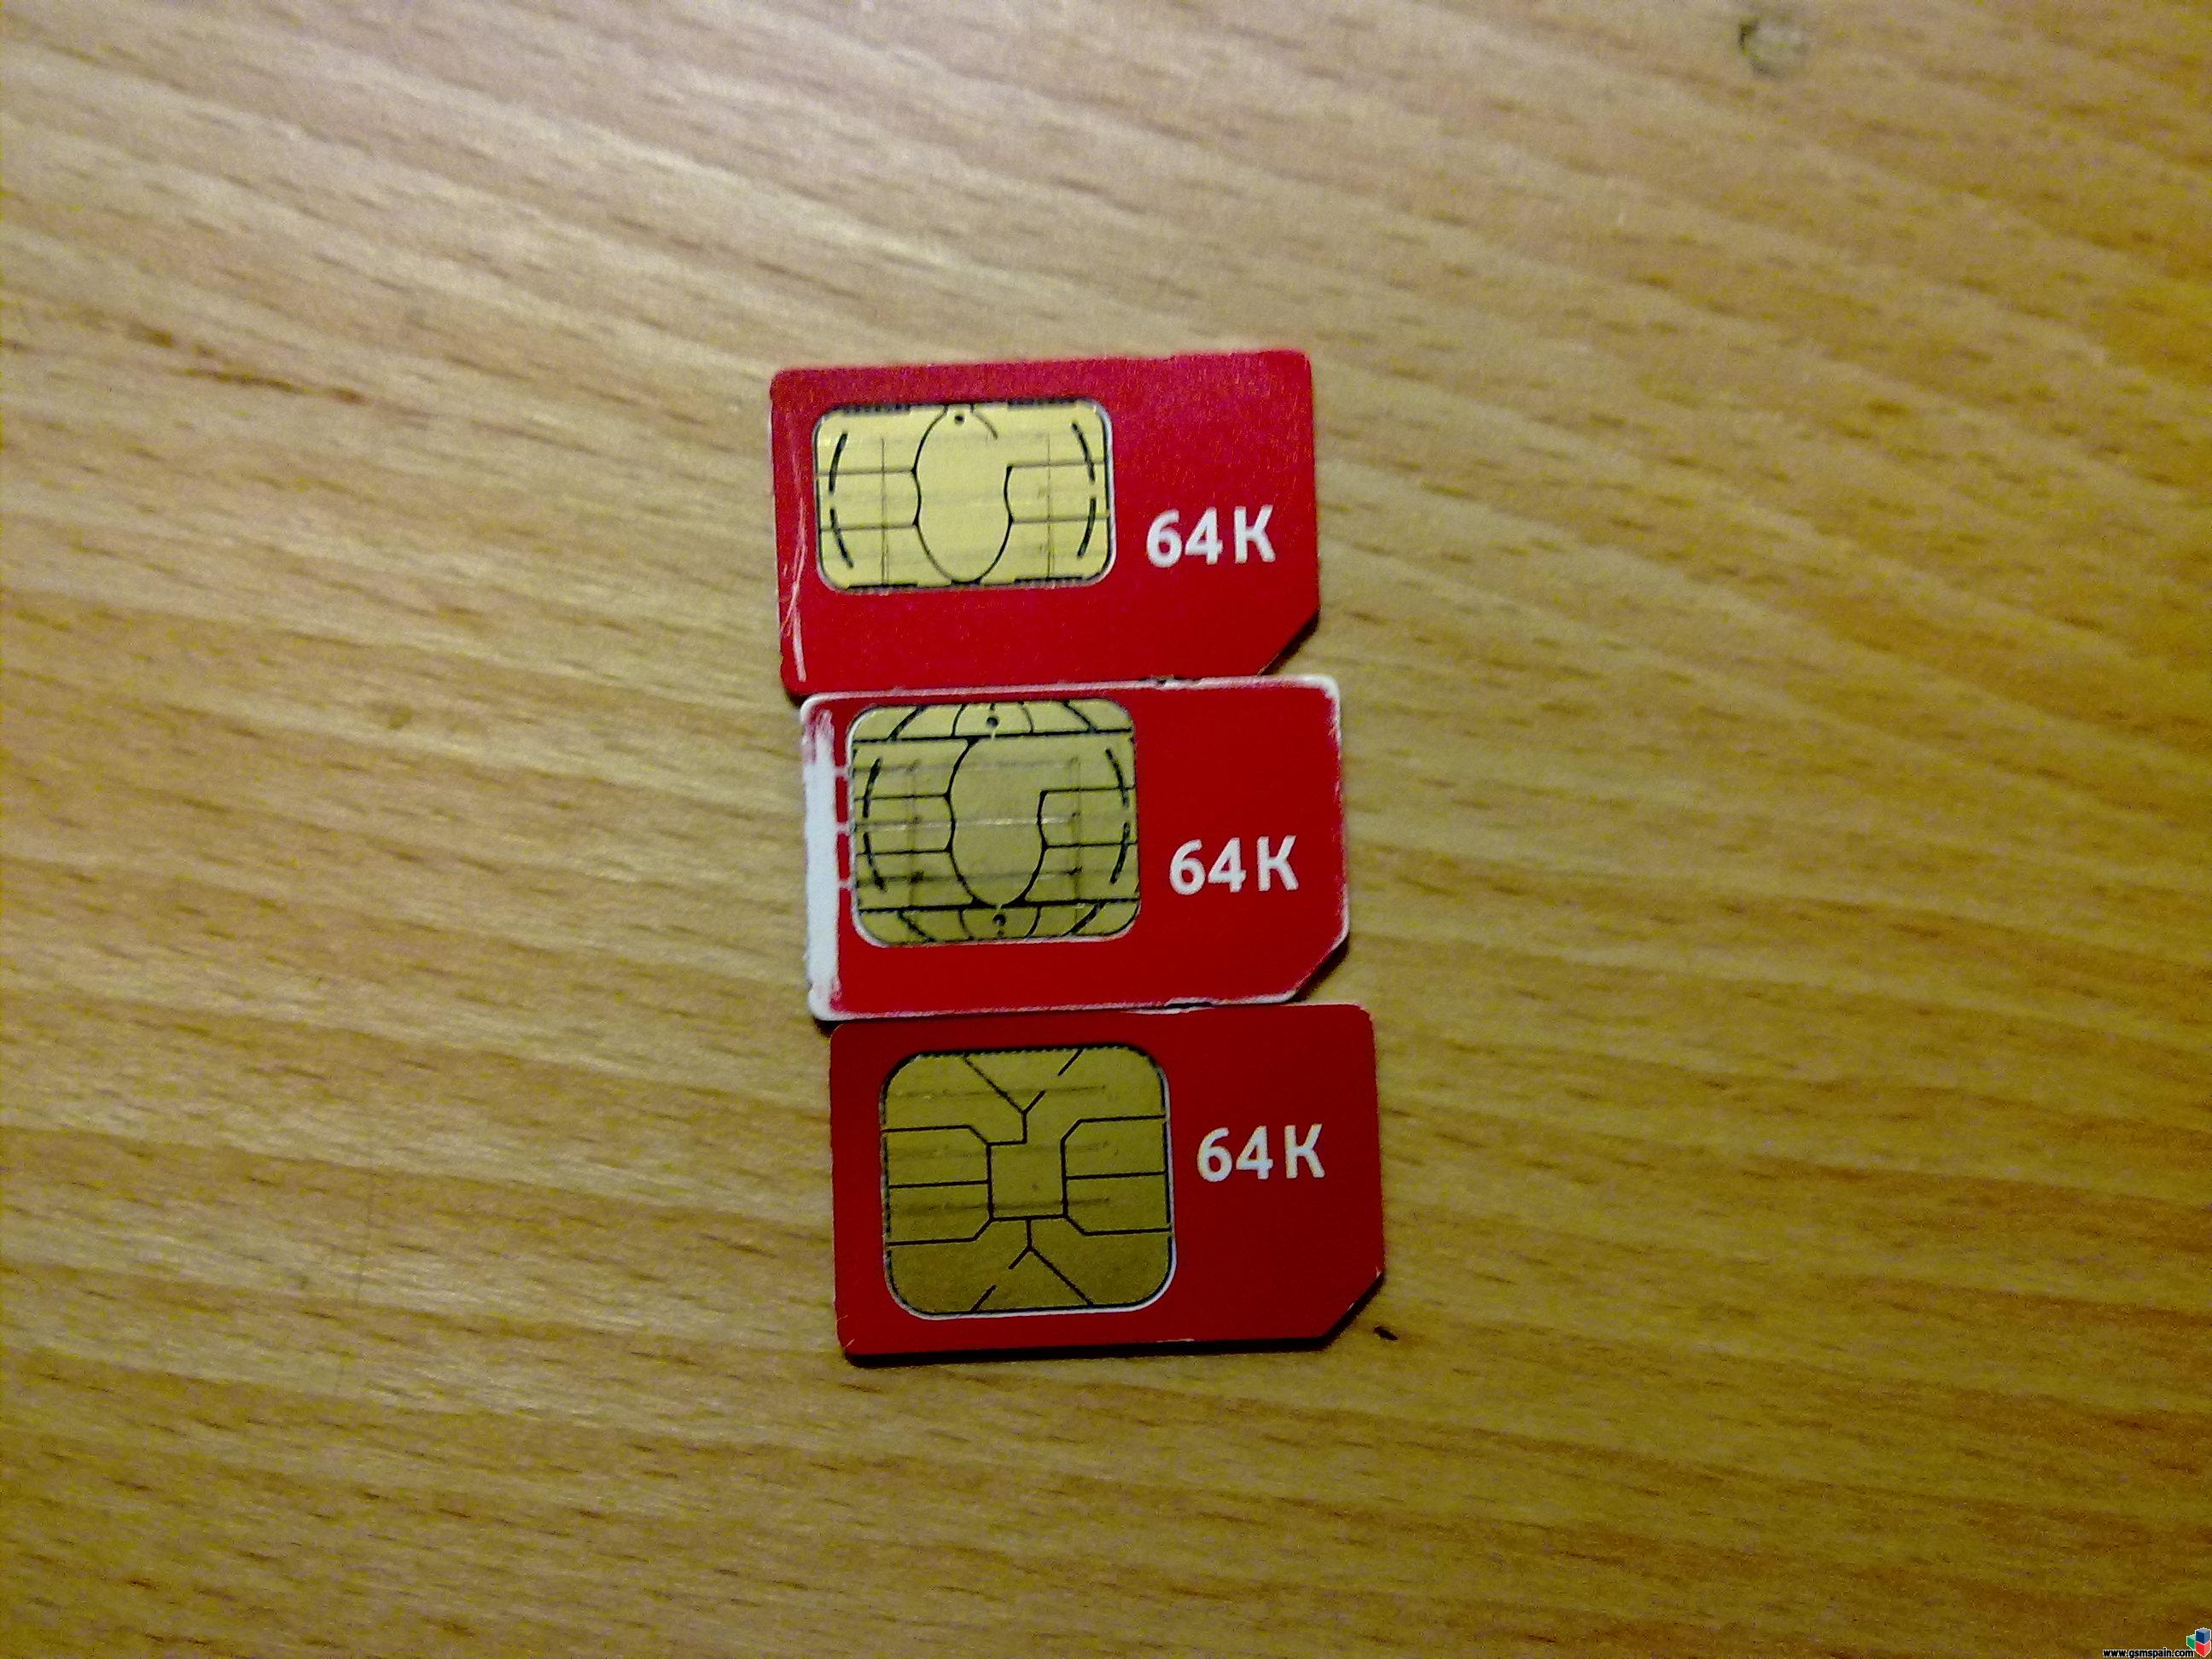 Tarjeta SIM de Vodafone: diferente a otras ?